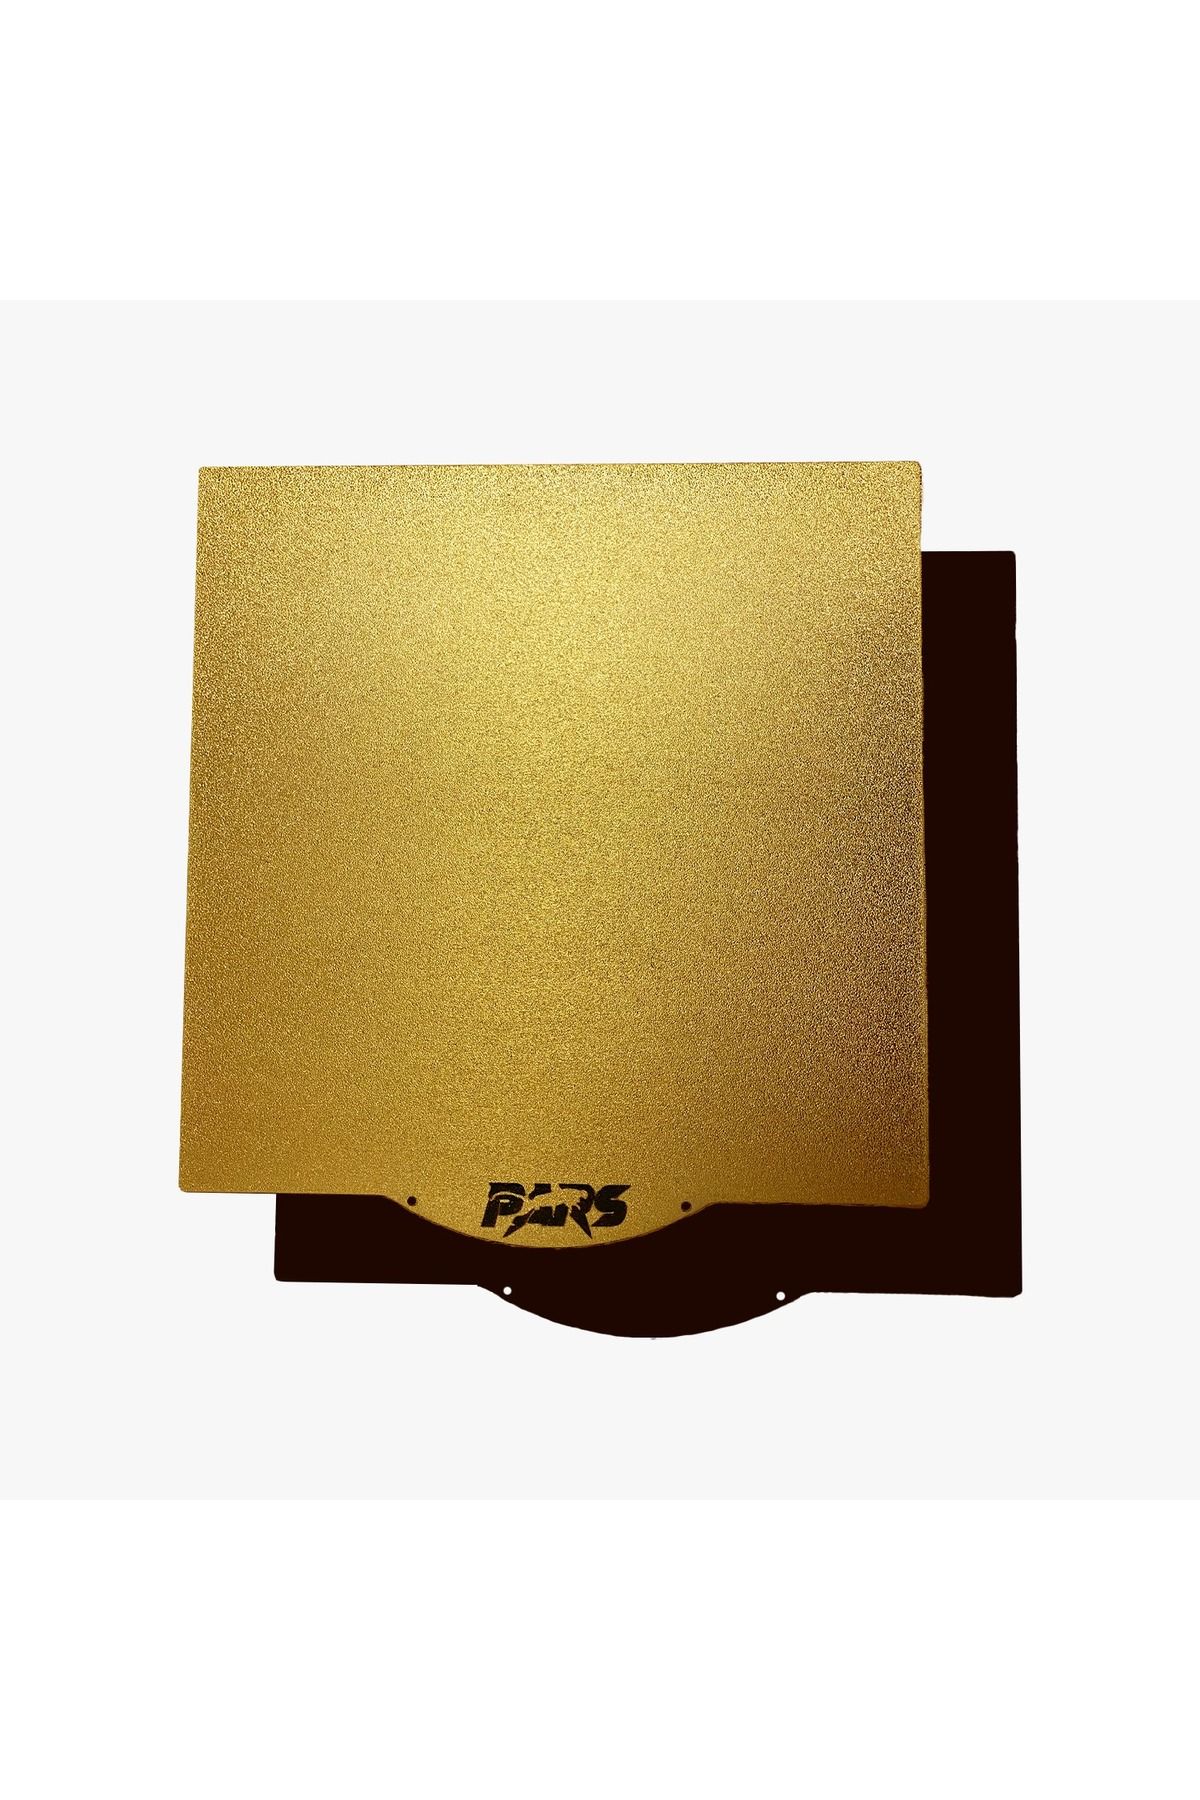 Pars 420x430 MM Pars Gold Pei Kaplı Özel Yay Çeliği Tabla Magnetli